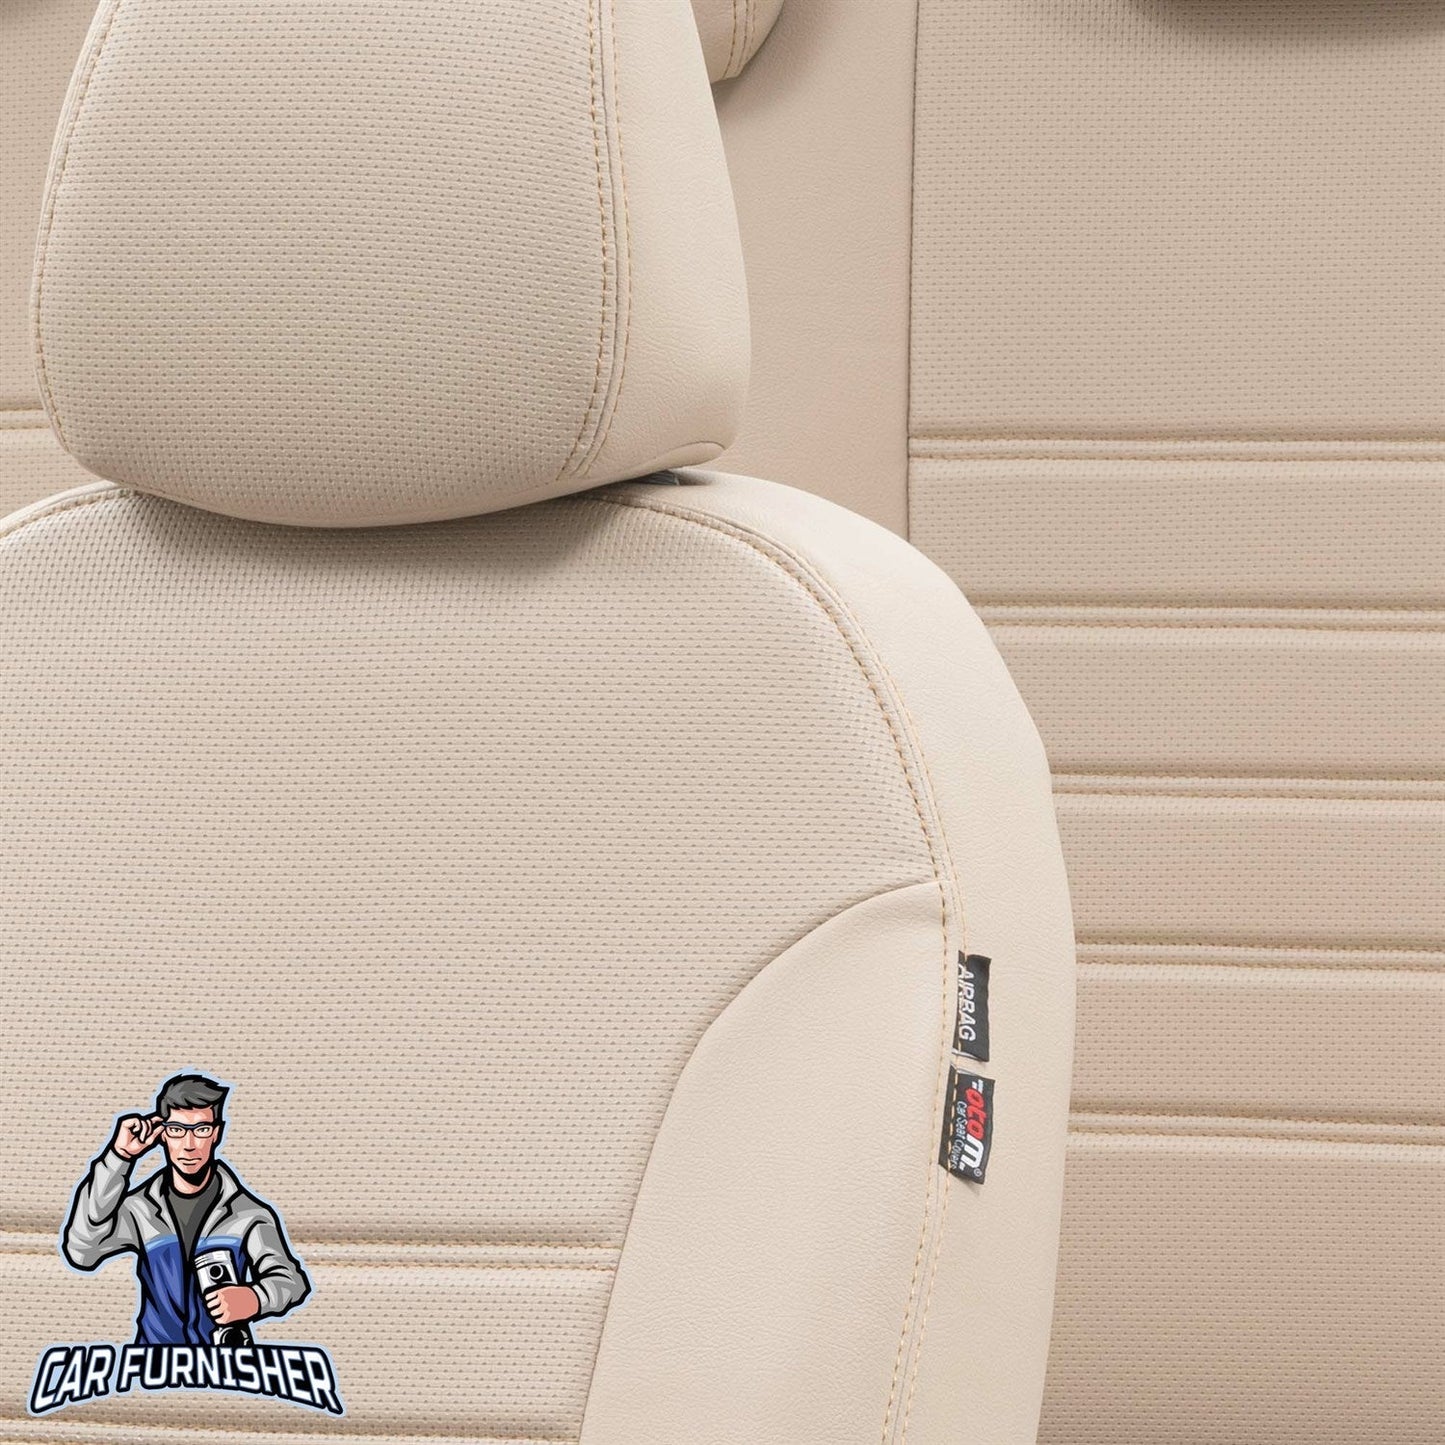 Honda CRV Seat Covers New York Leather Design Beige Leather